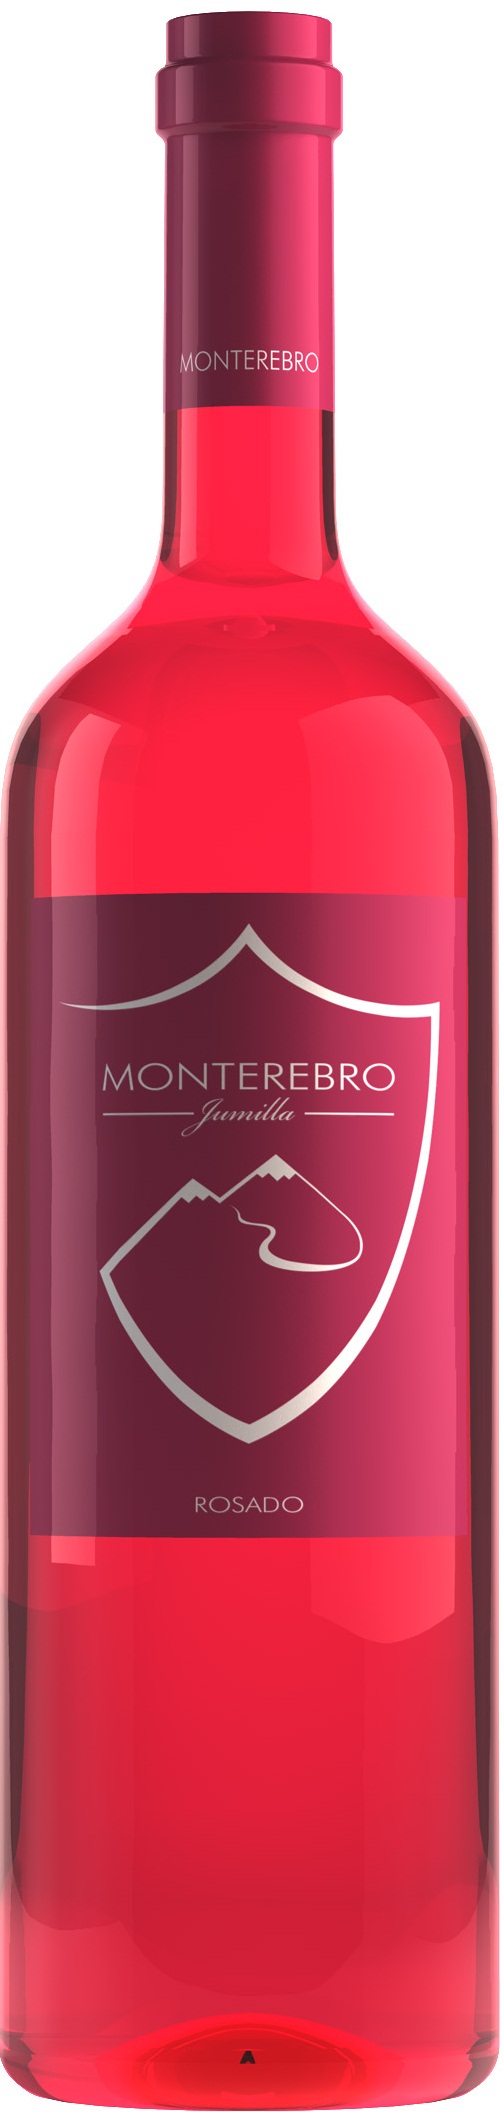 Image of Wine bottle Monterebro Rosado